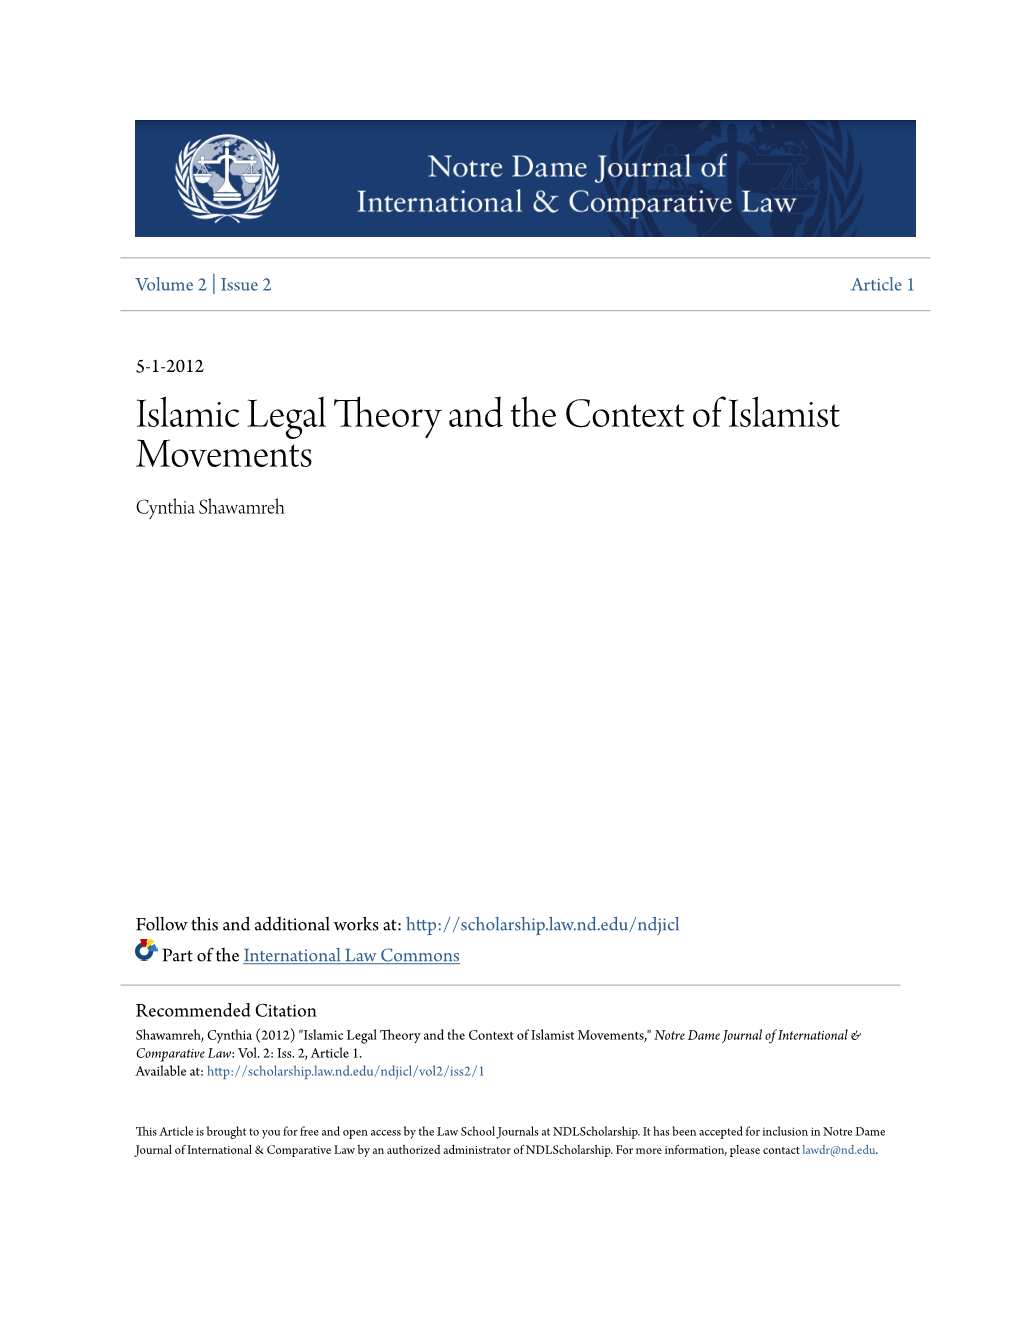 Islamic Legal Theory and the Context of Islamist Movements Cynthia Shawamreh